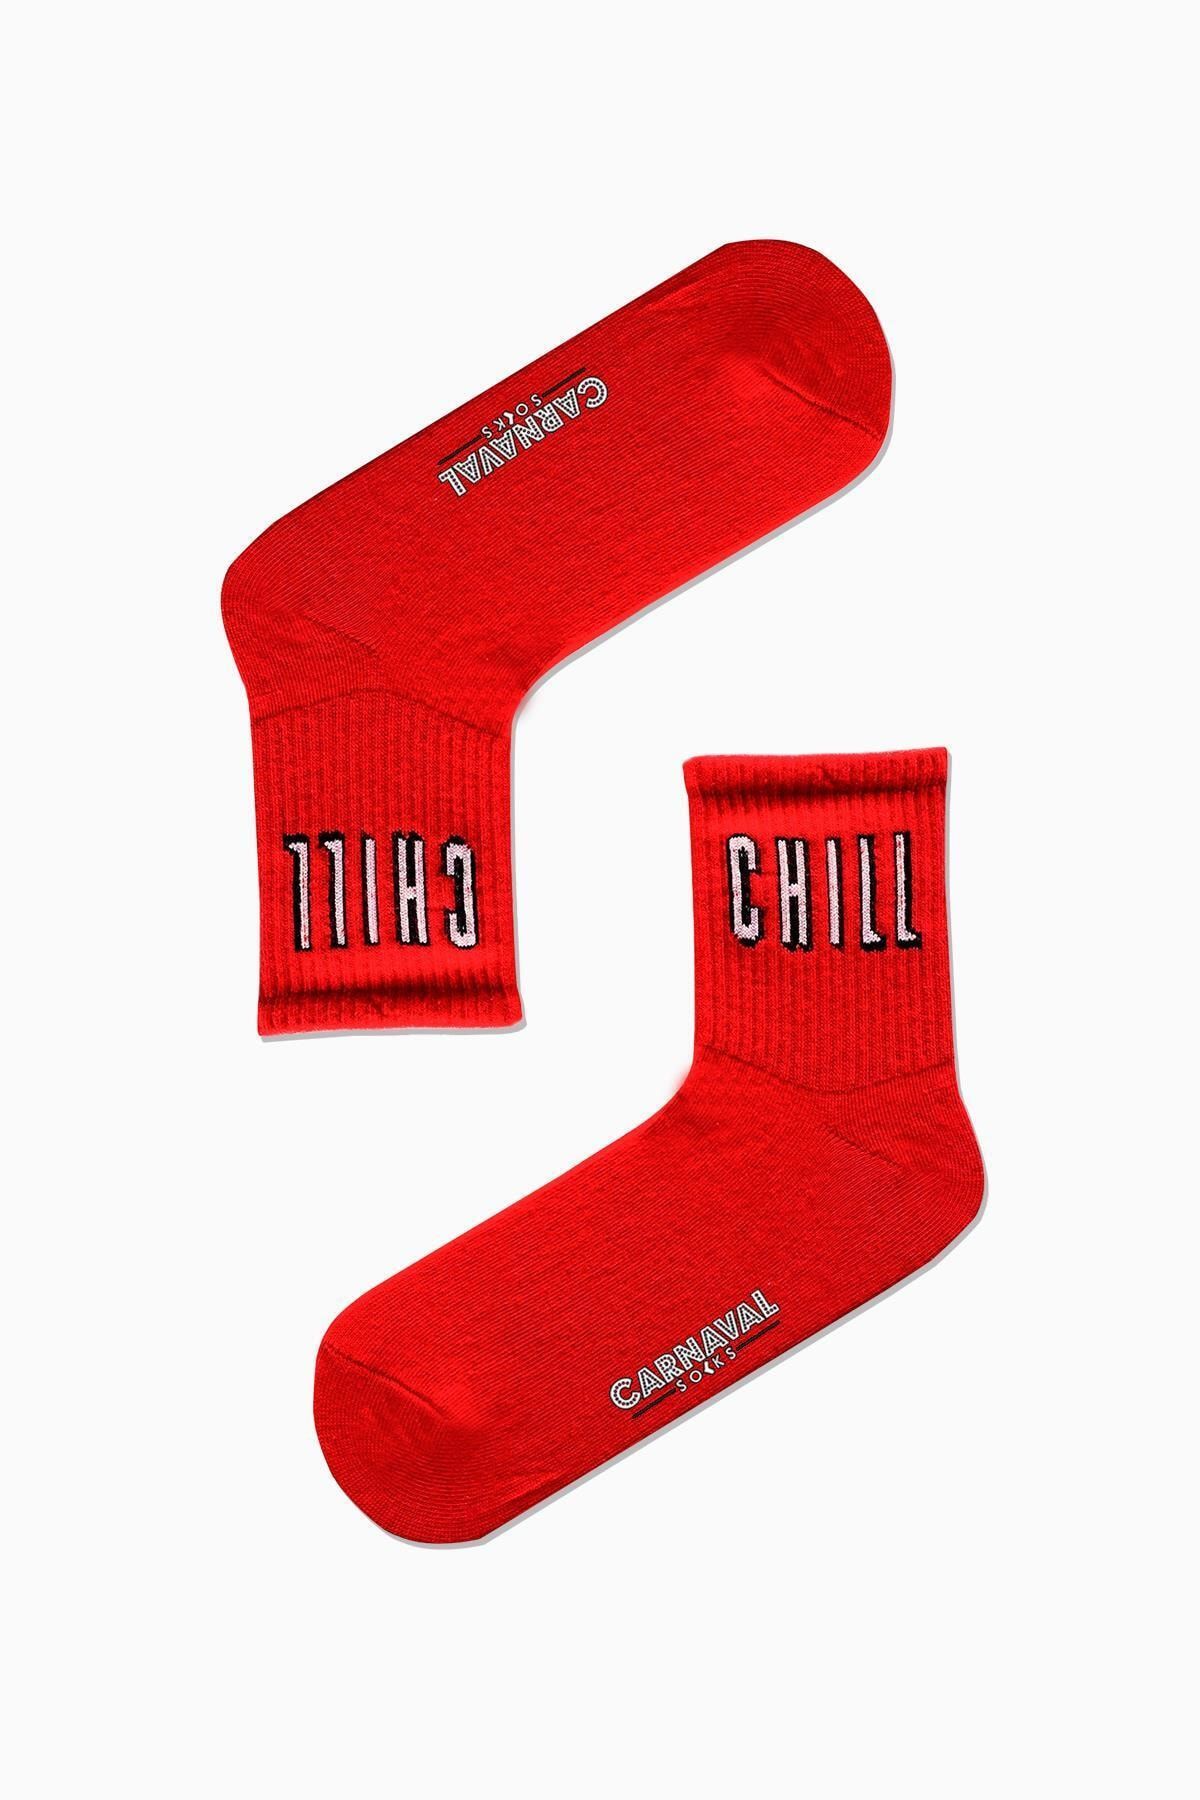 CARNAVAL SOCKS Chill Yazılı Desenli Renkli Spor Çorap